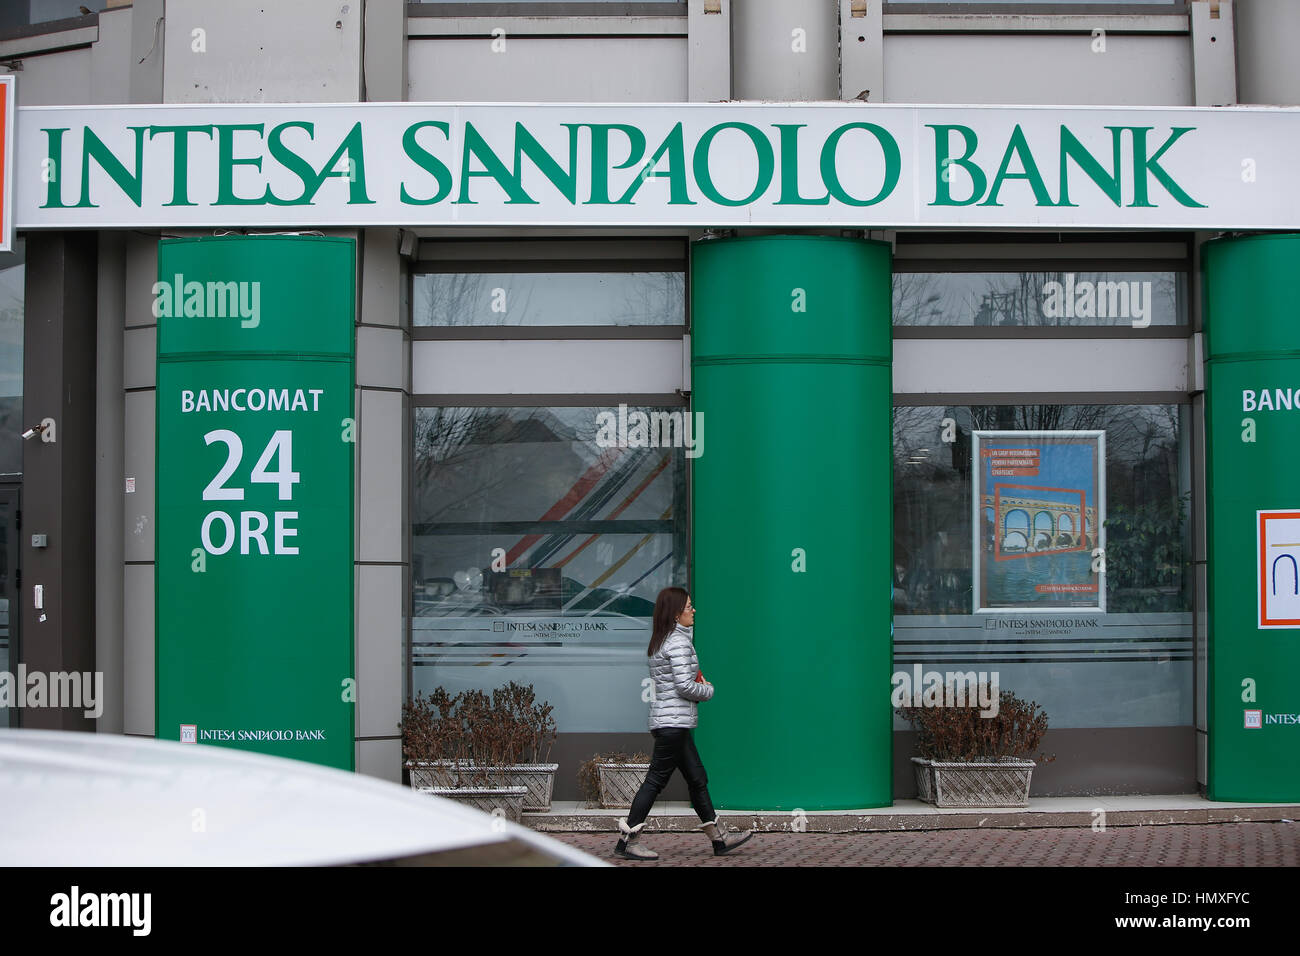 Intesa Sanpaolo Group Press Release - Intesa Sanpaolo Bank